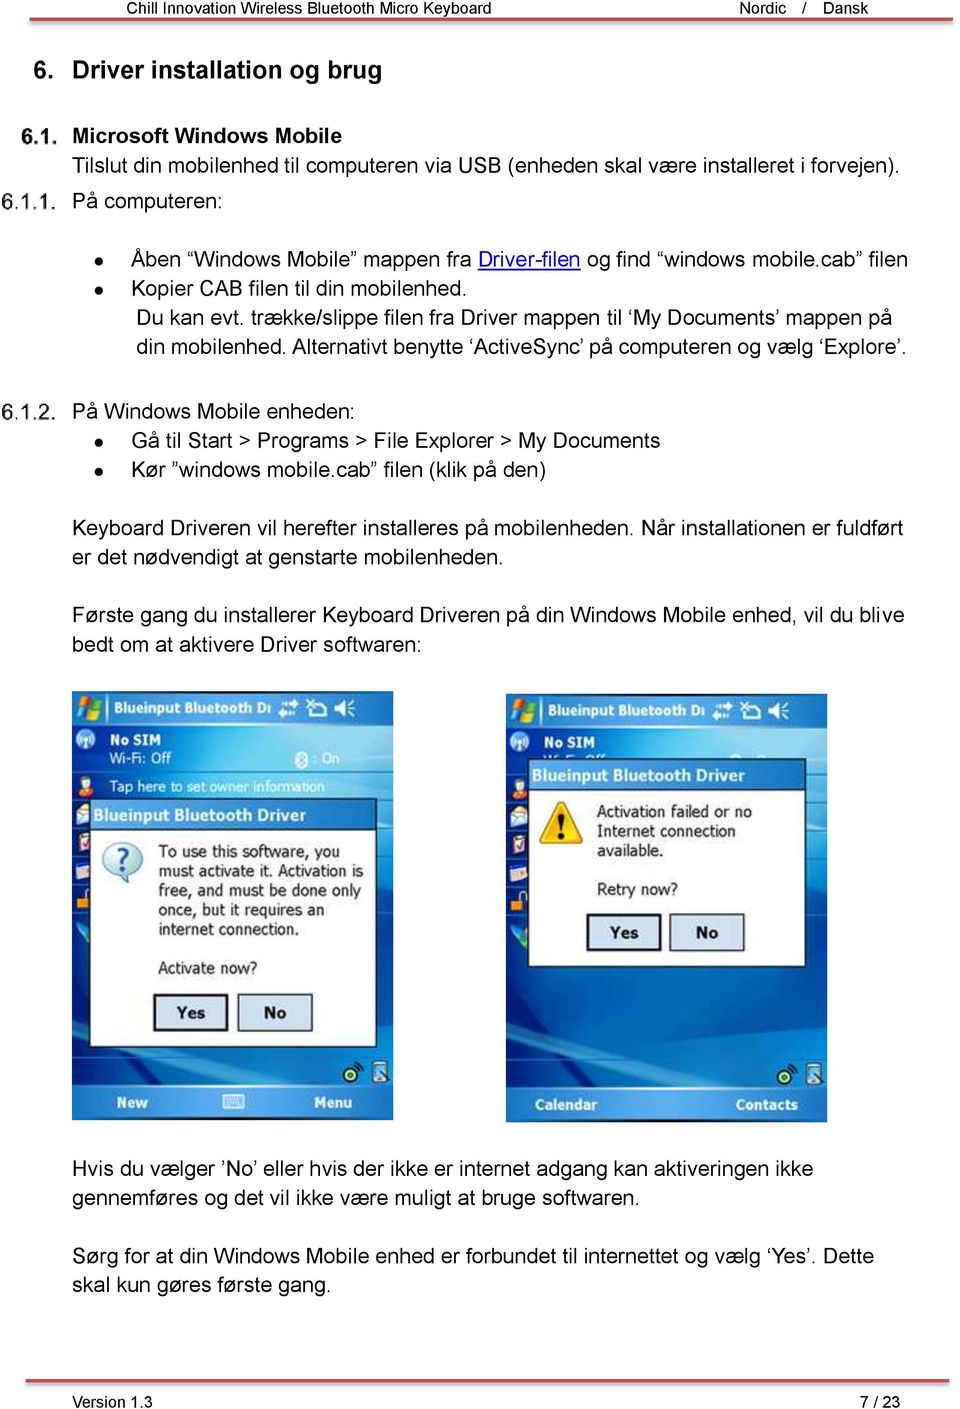 Chill Innovation Wireless Bluetooth Micro Keyboard - PDF Gratis download